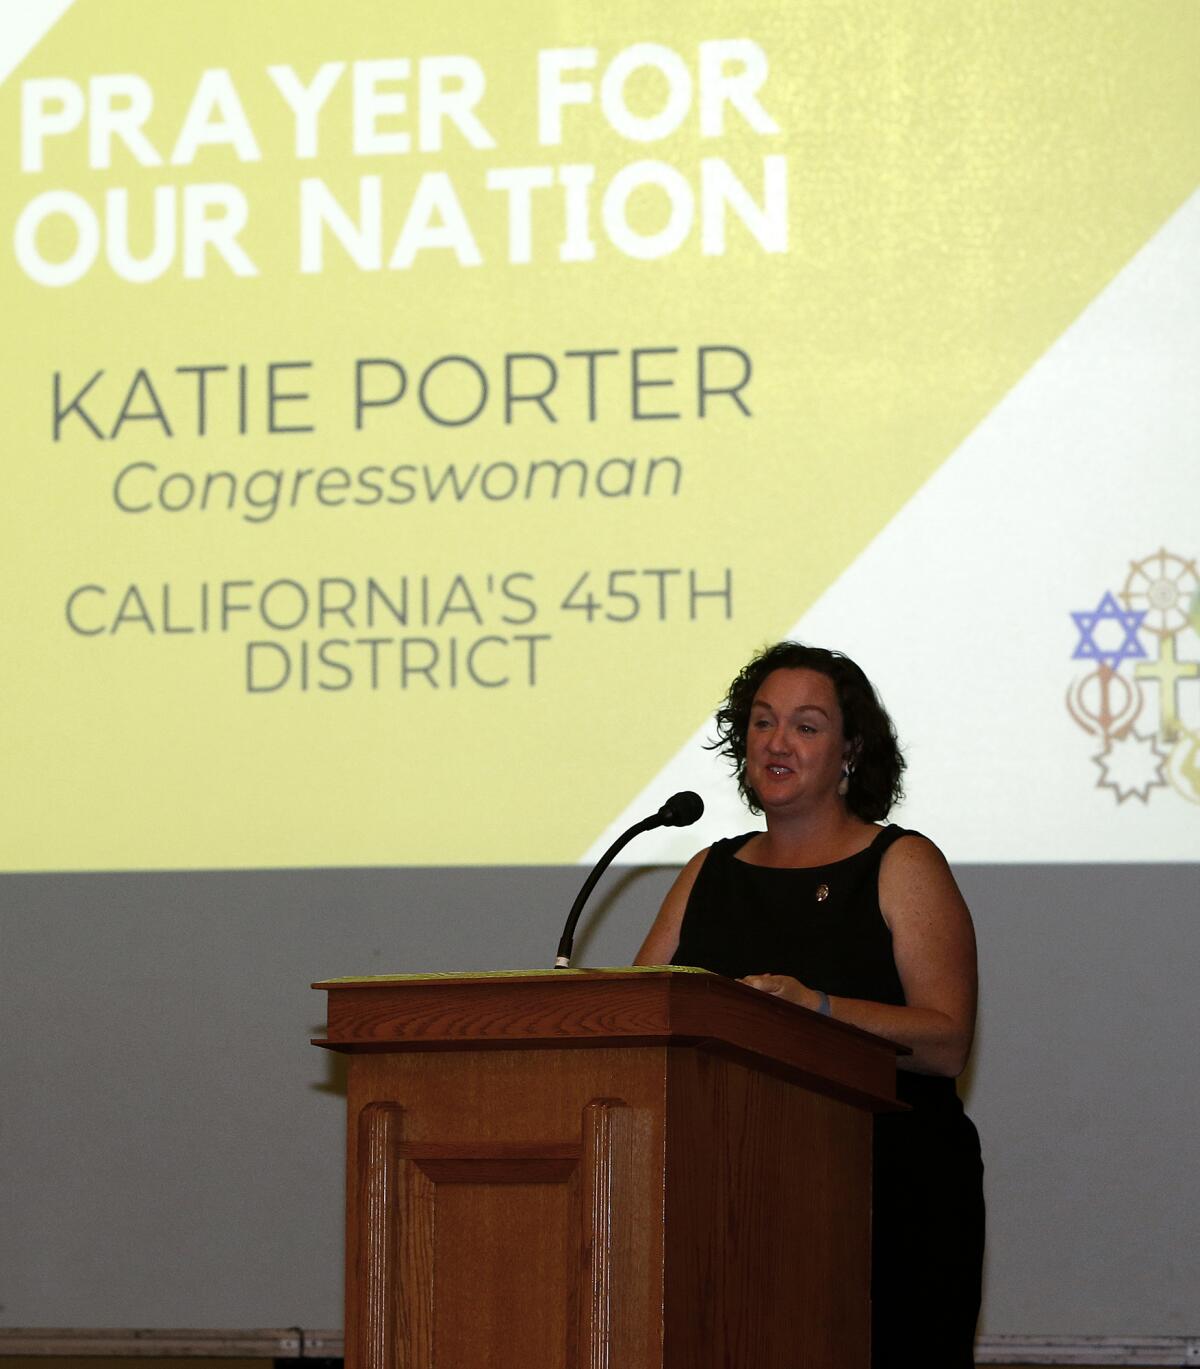 Congresswoman Katie Porter shares a prayer for the nation.